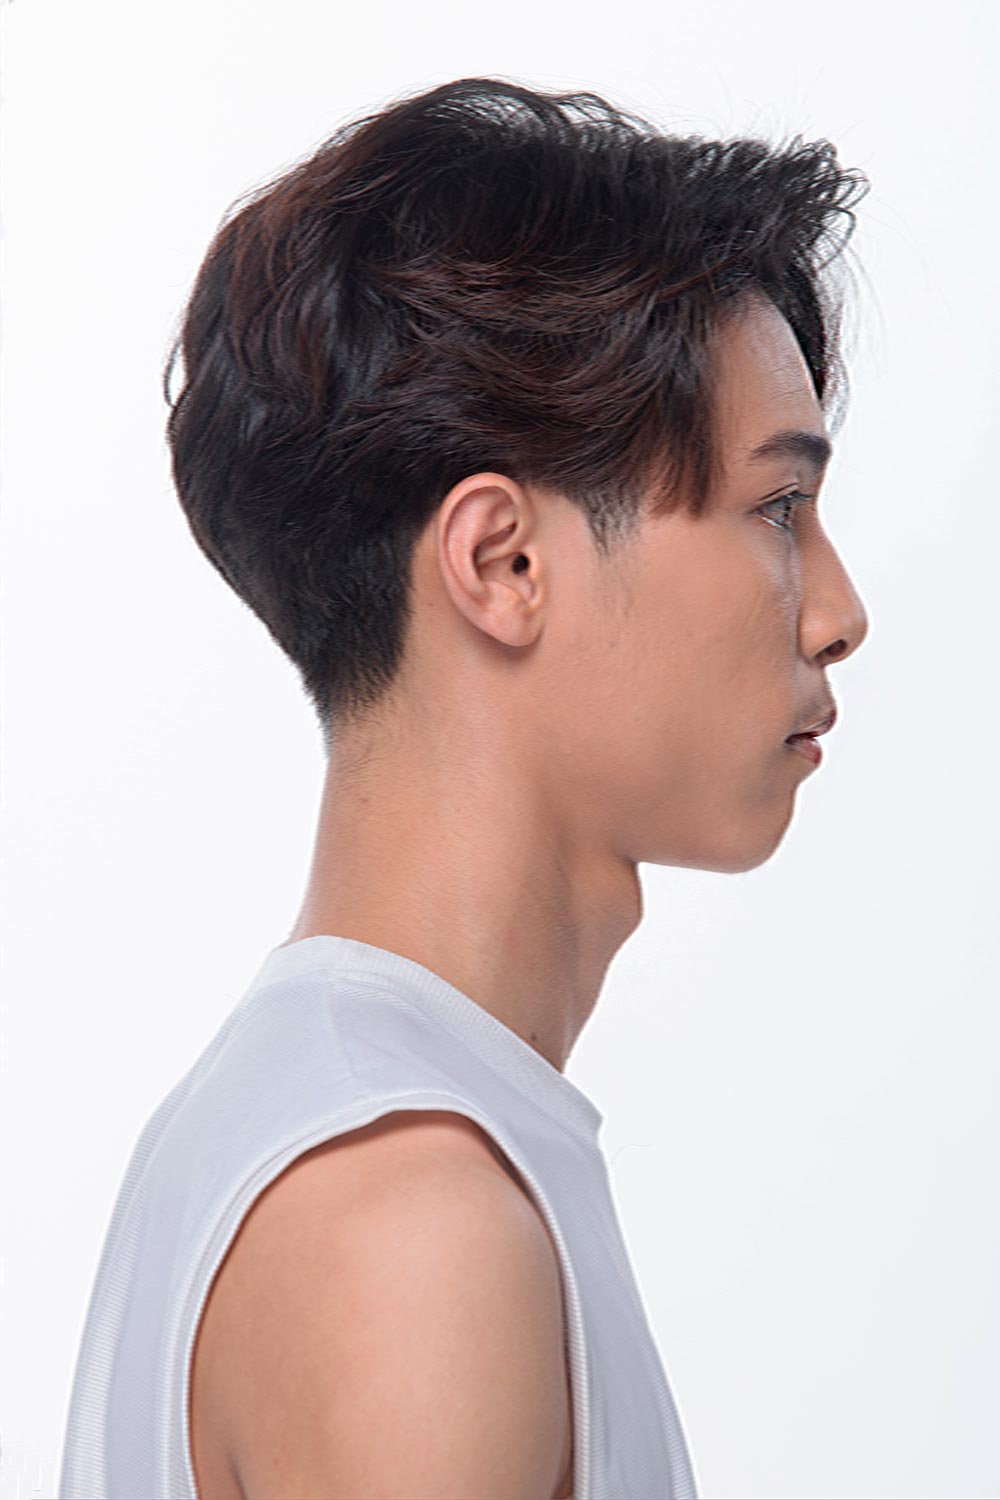 Korean Middle Part Fade Haircut#koreanhaircut #koreanmenhaircut #koreanhairstyles #koreanhairmen